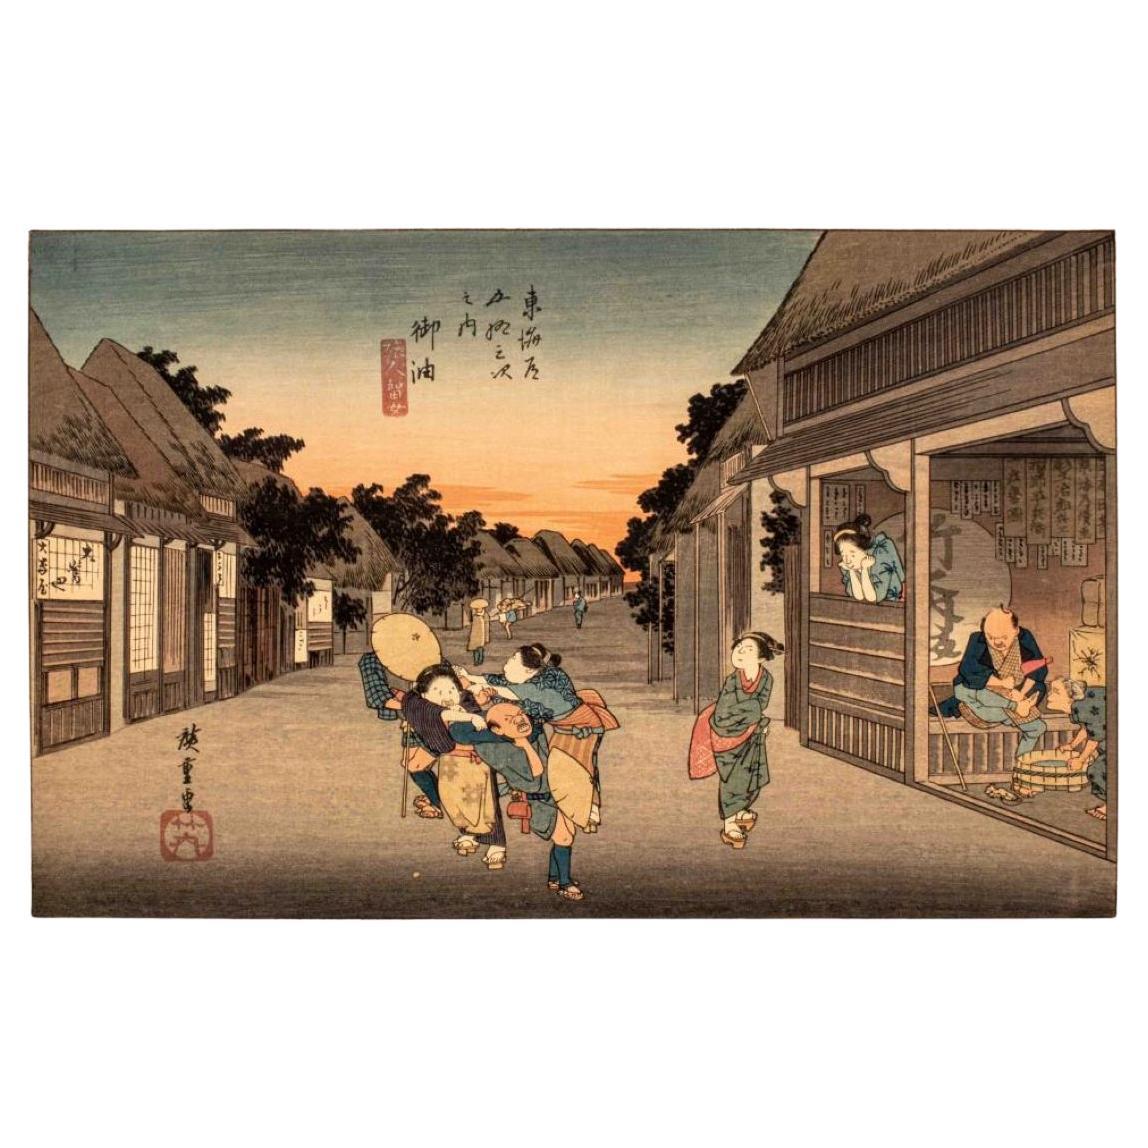 After Hiroshige "Goyu Tabibito Tomeonna" Woodblock For Sale